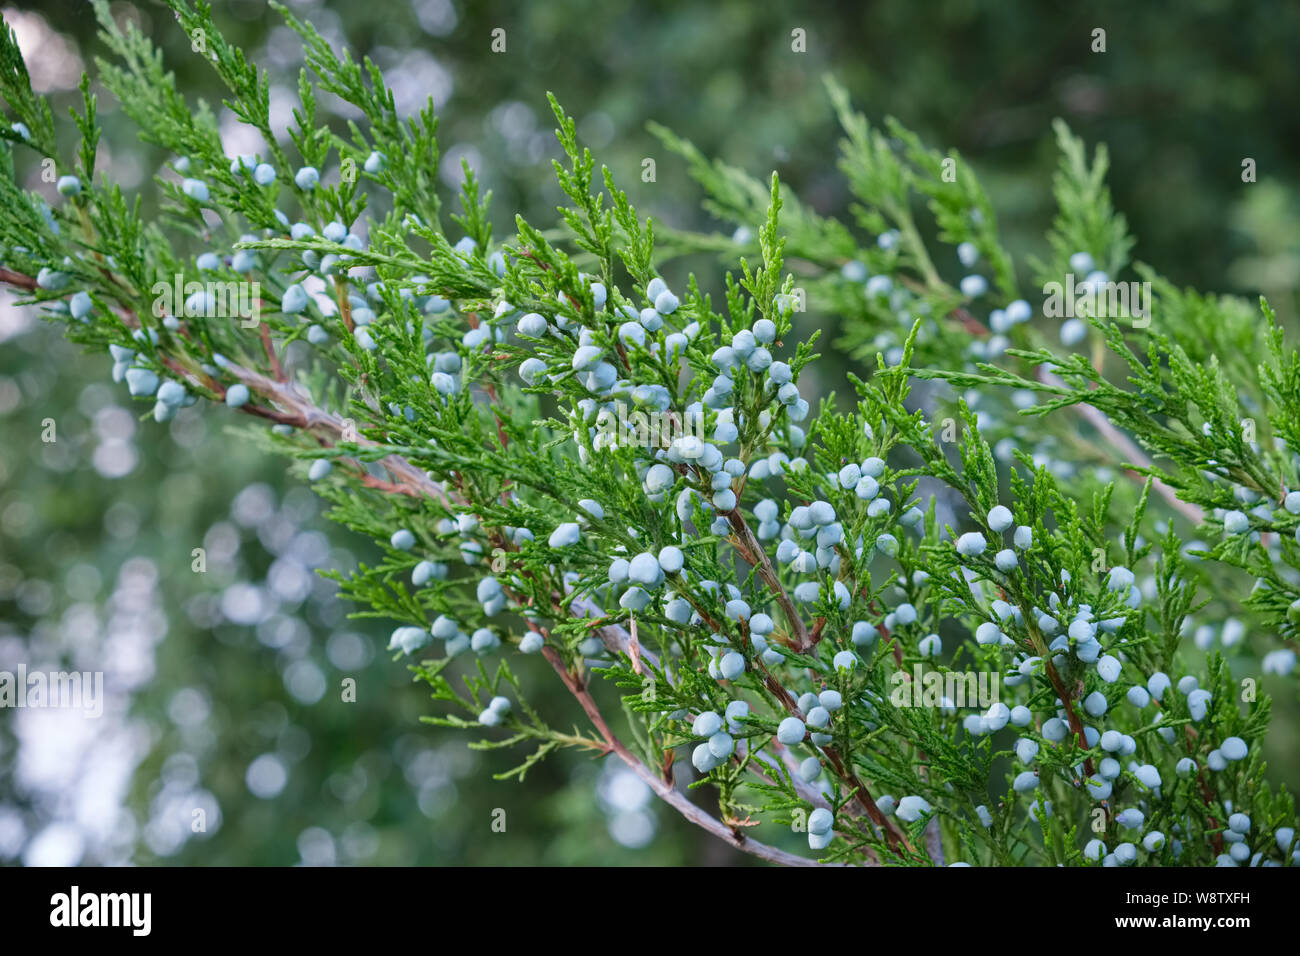 Juniper bush branch with berries Stock Photo - Alamy